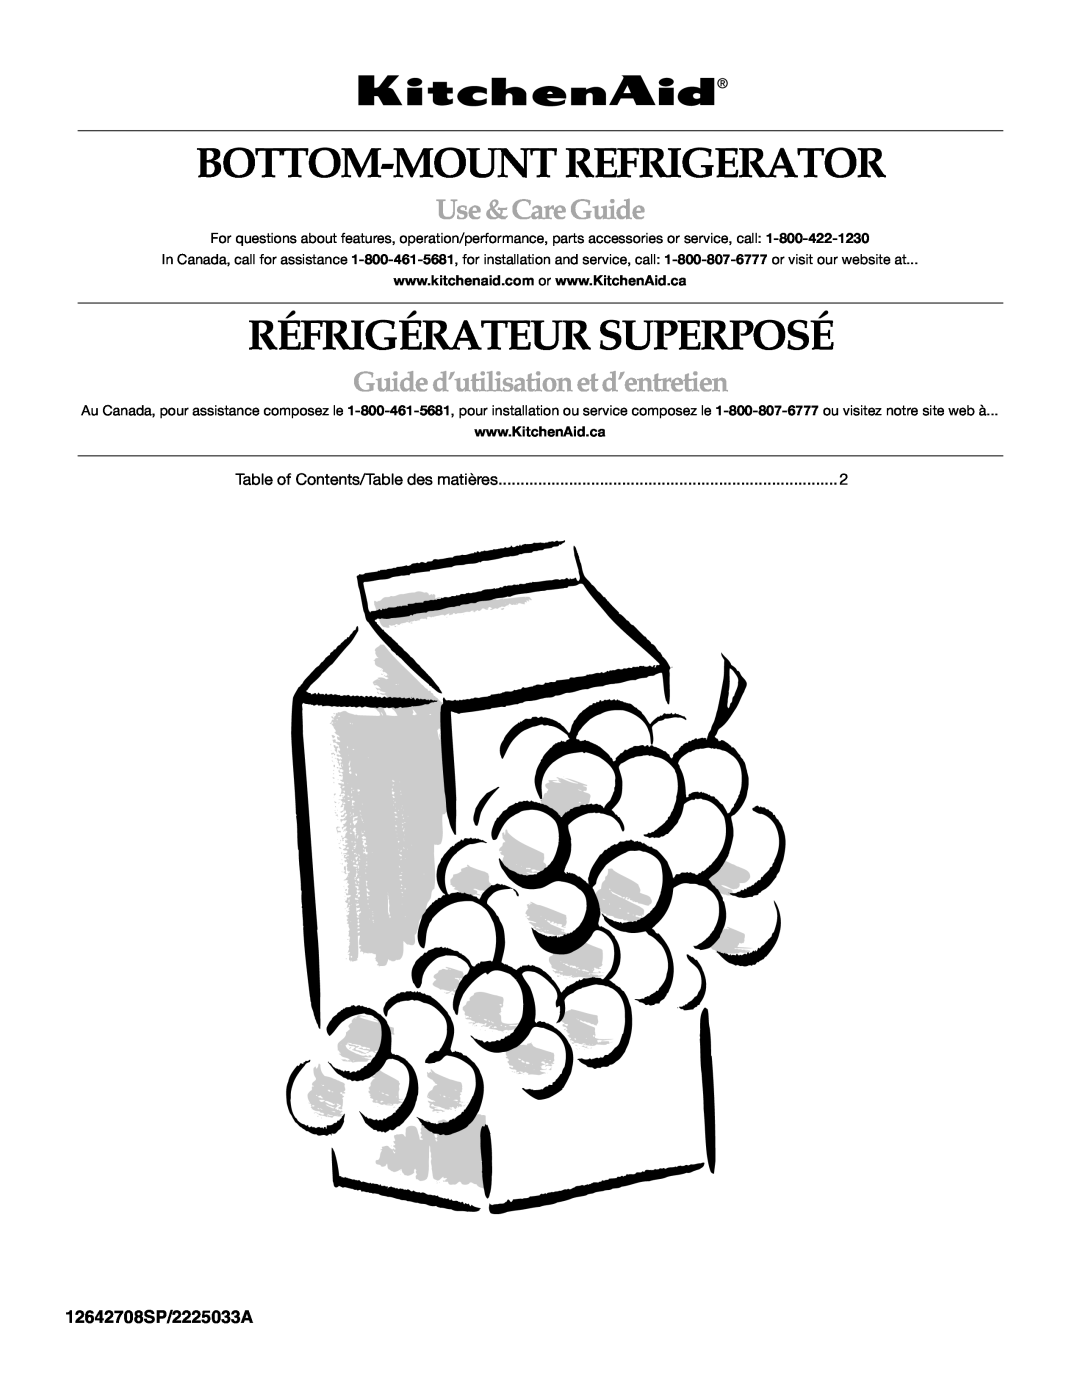 KitchenAid manual Bottom-Mount Refrigerator, Use &CareGuide, 12642708SP/2225033A, Réfrigérateur Superposé 